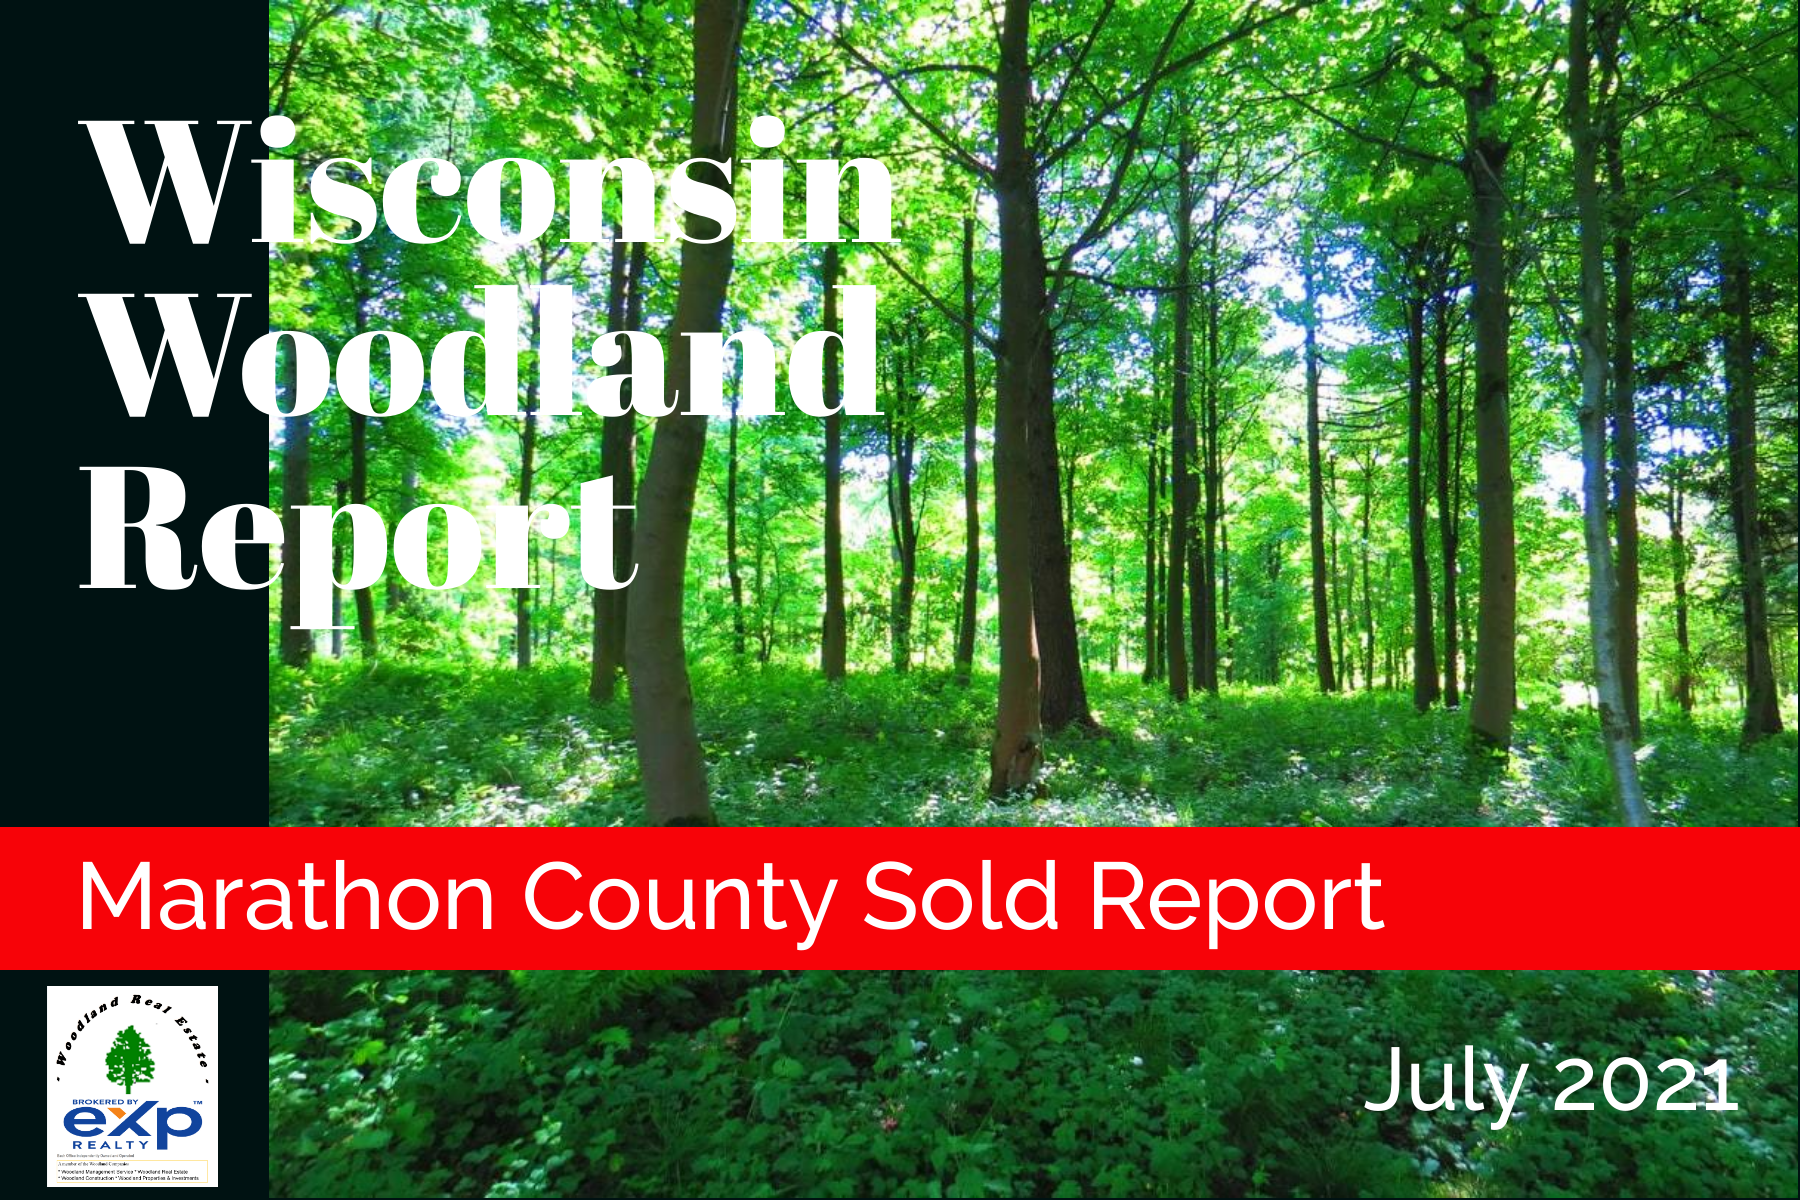 07-21_-_Marathon_SOLD_Woodland-Reports-1800x1200-layout1775-1gertfk.png